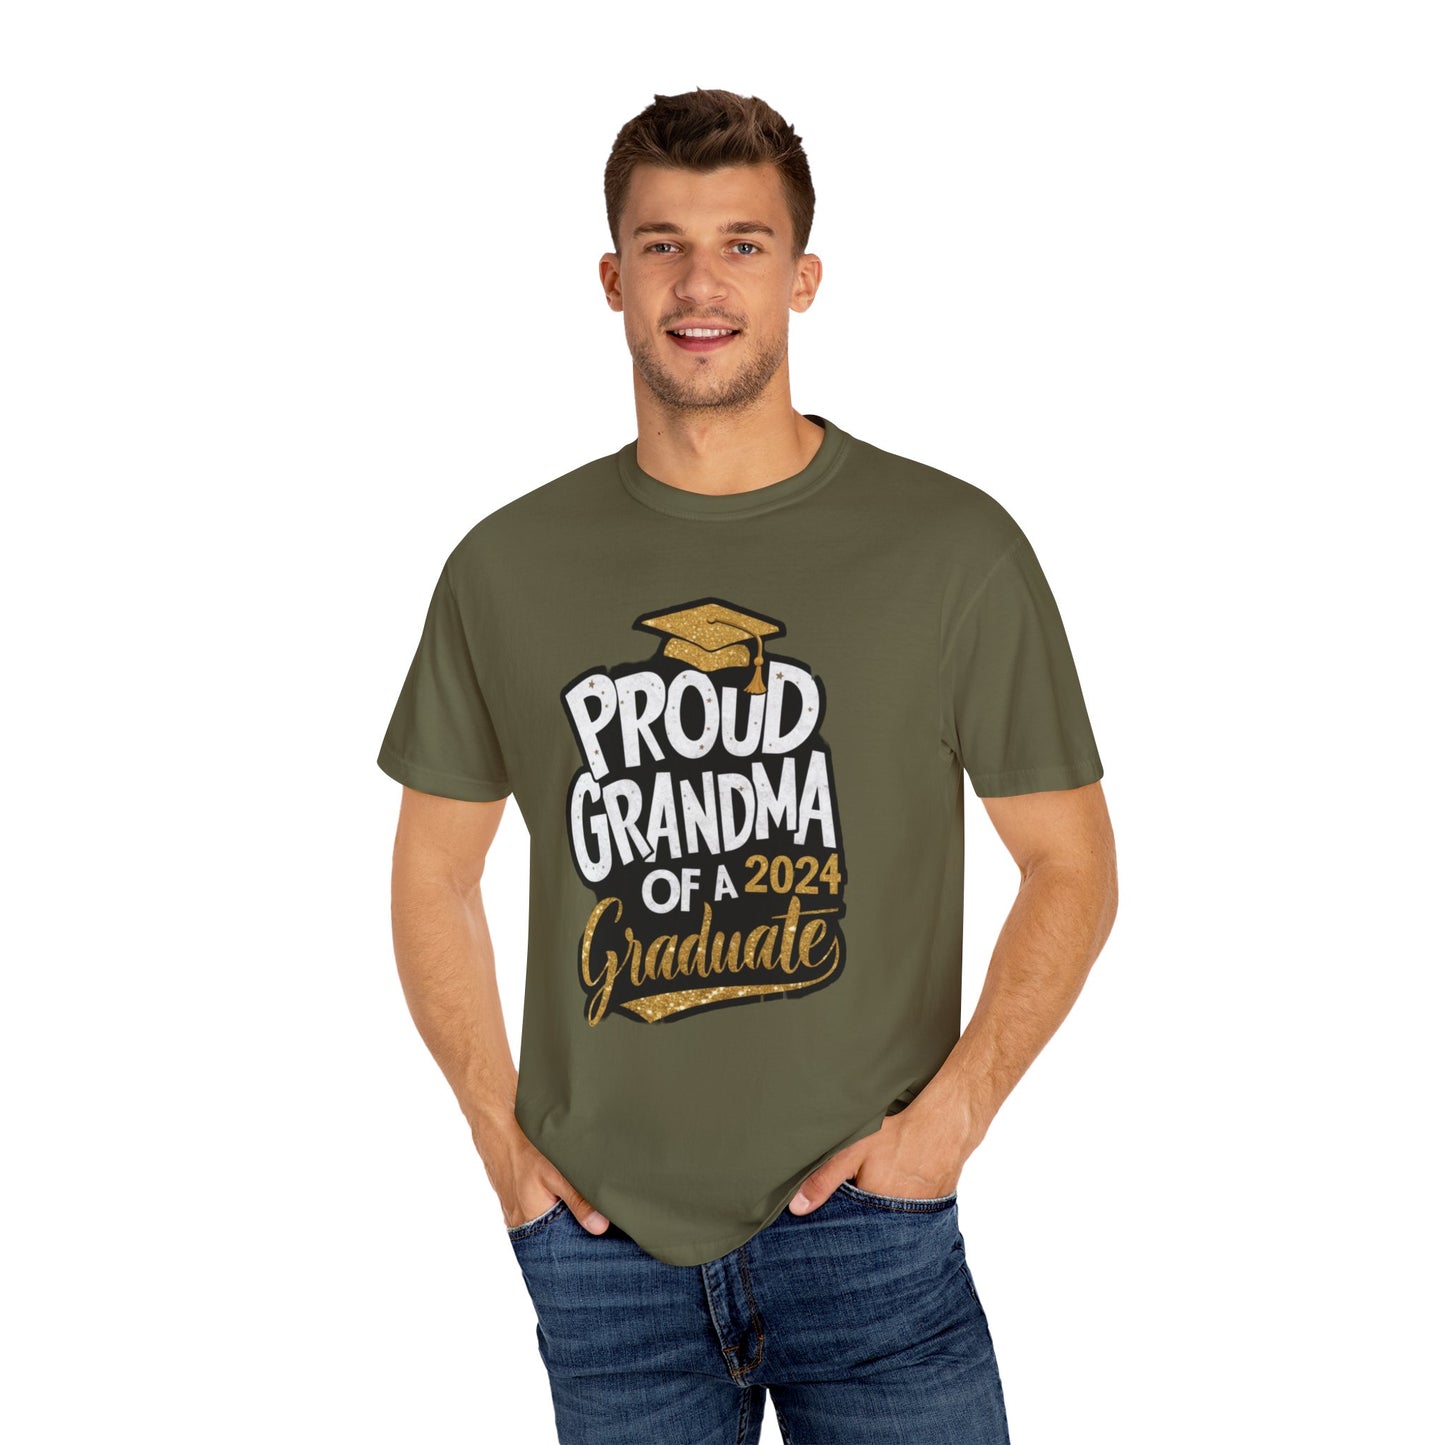 Proud of Grandma 2024 Graduate Unisex Garment-dyed T-shirt Cotton Funny Humorous Graphic Soft Premium Unisex Men Women Sage T-shirt Birthday Gift-54